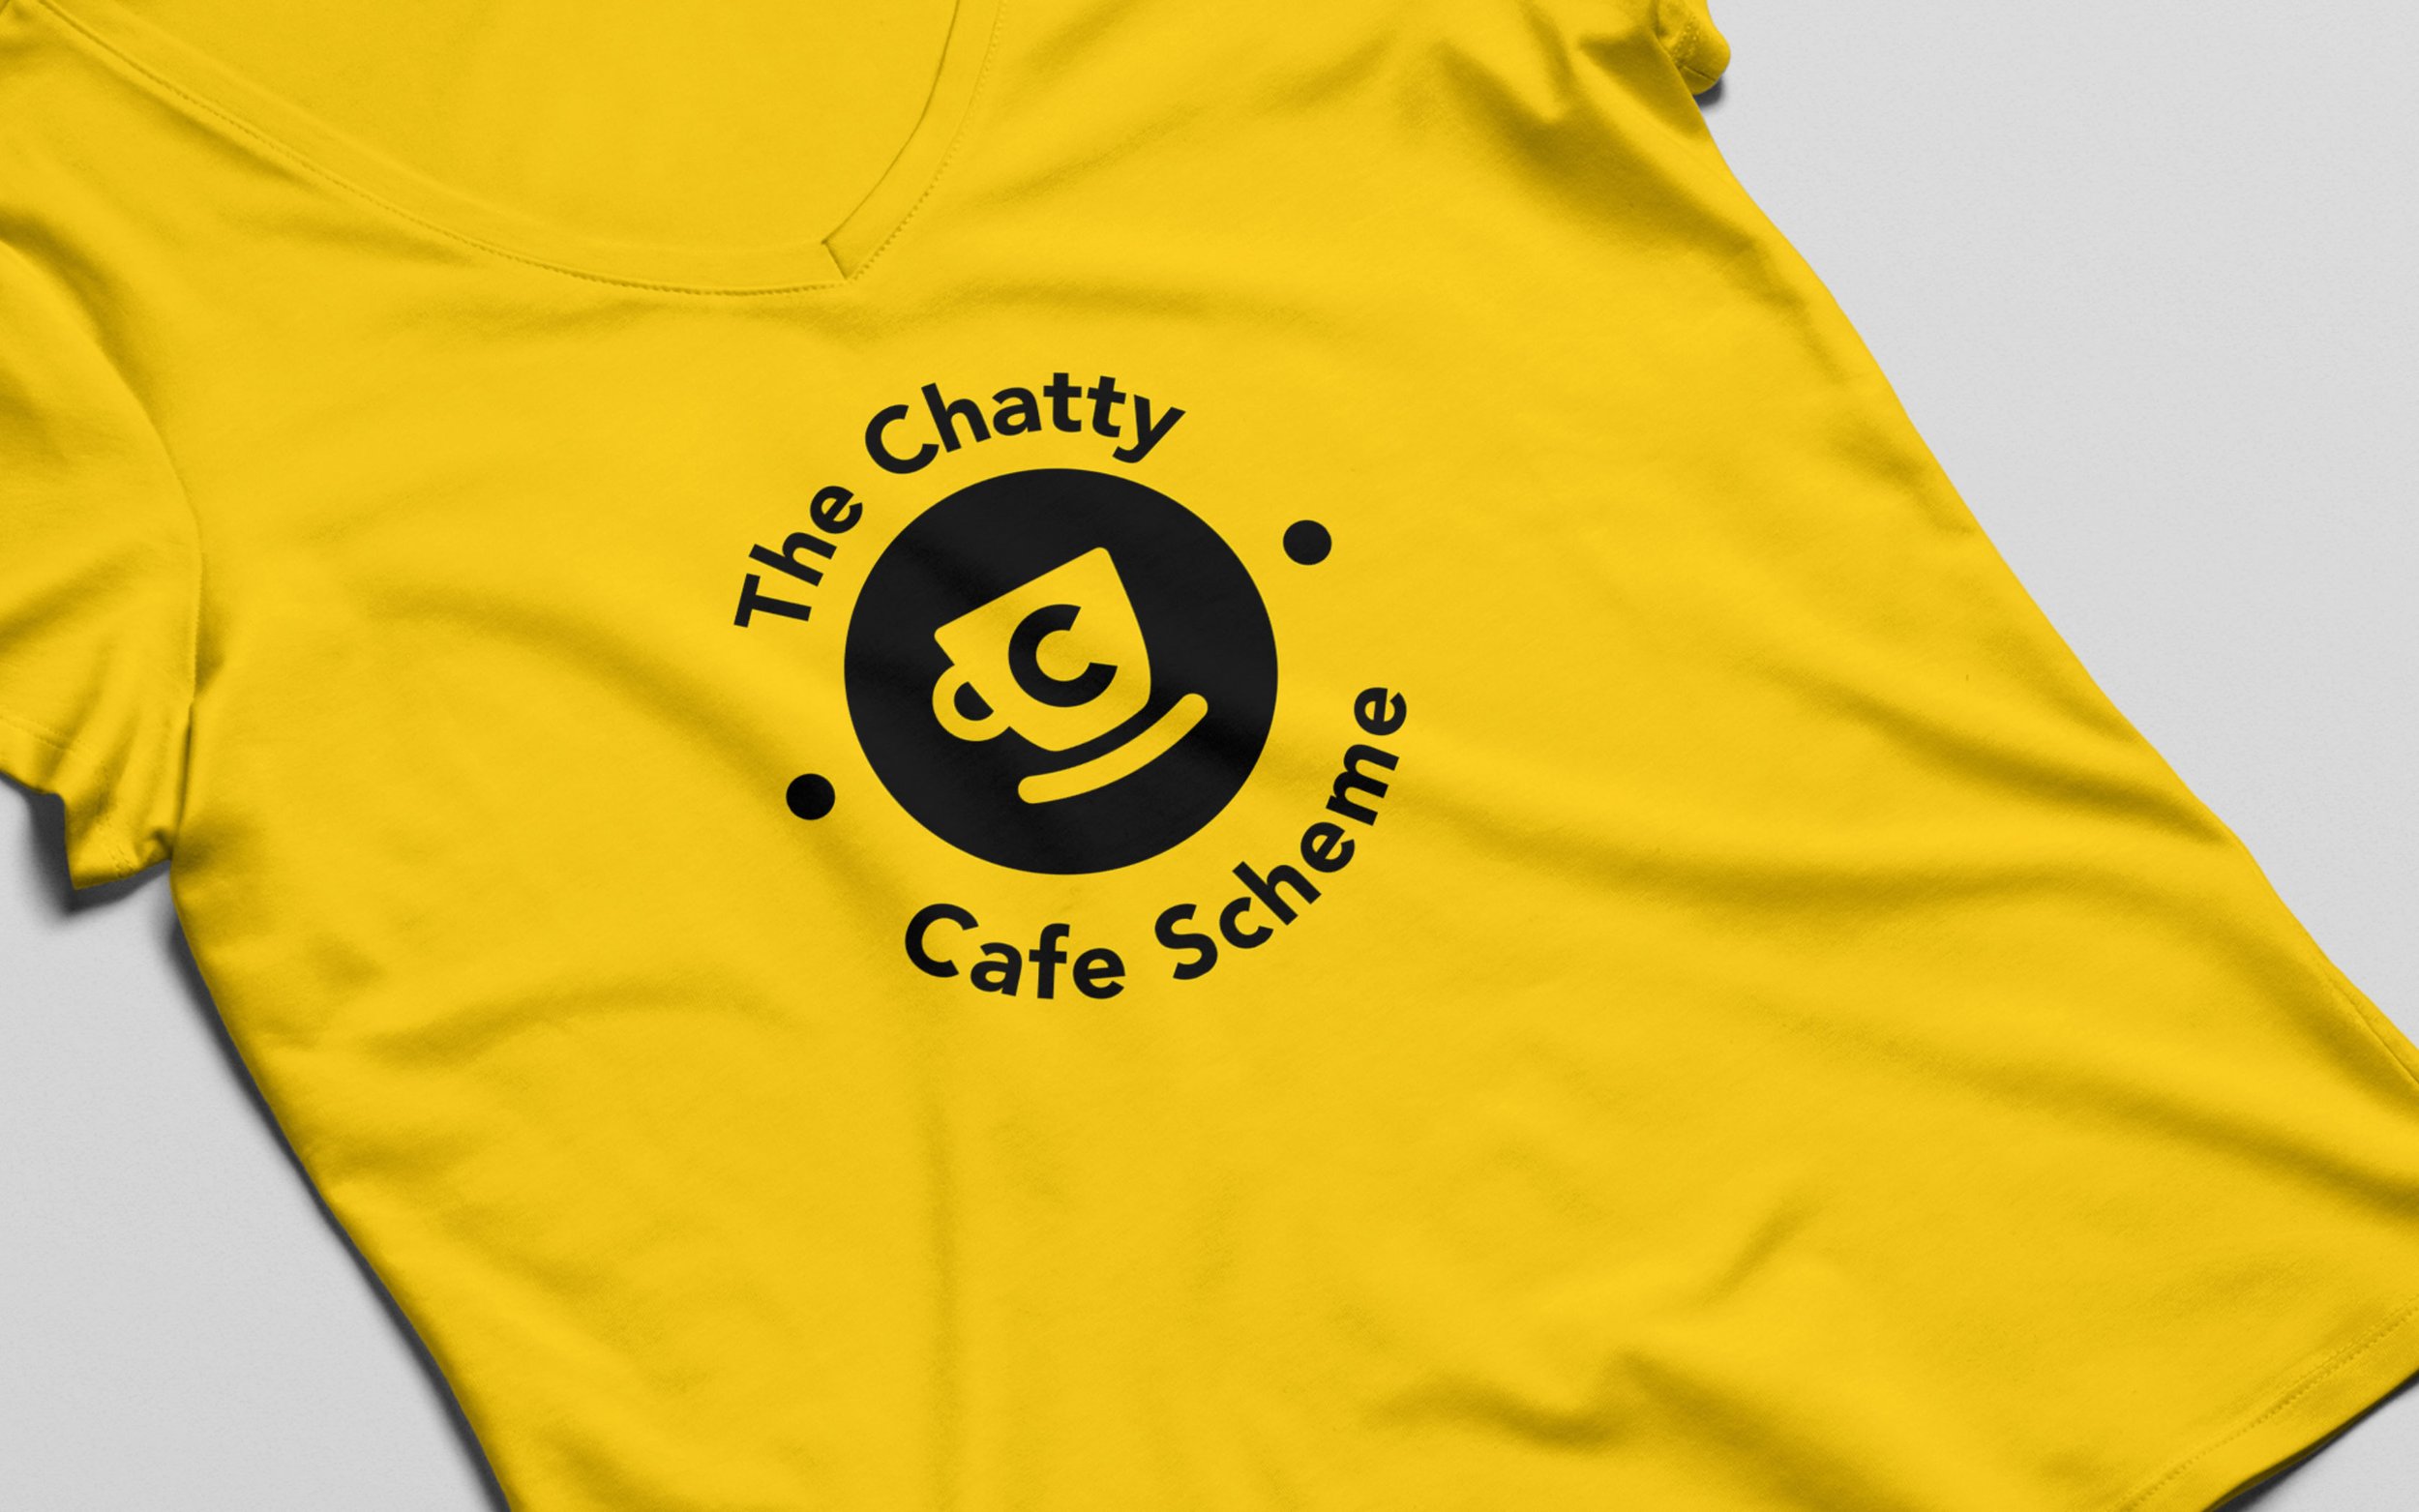 Chatty_shirt_zoom.jpg